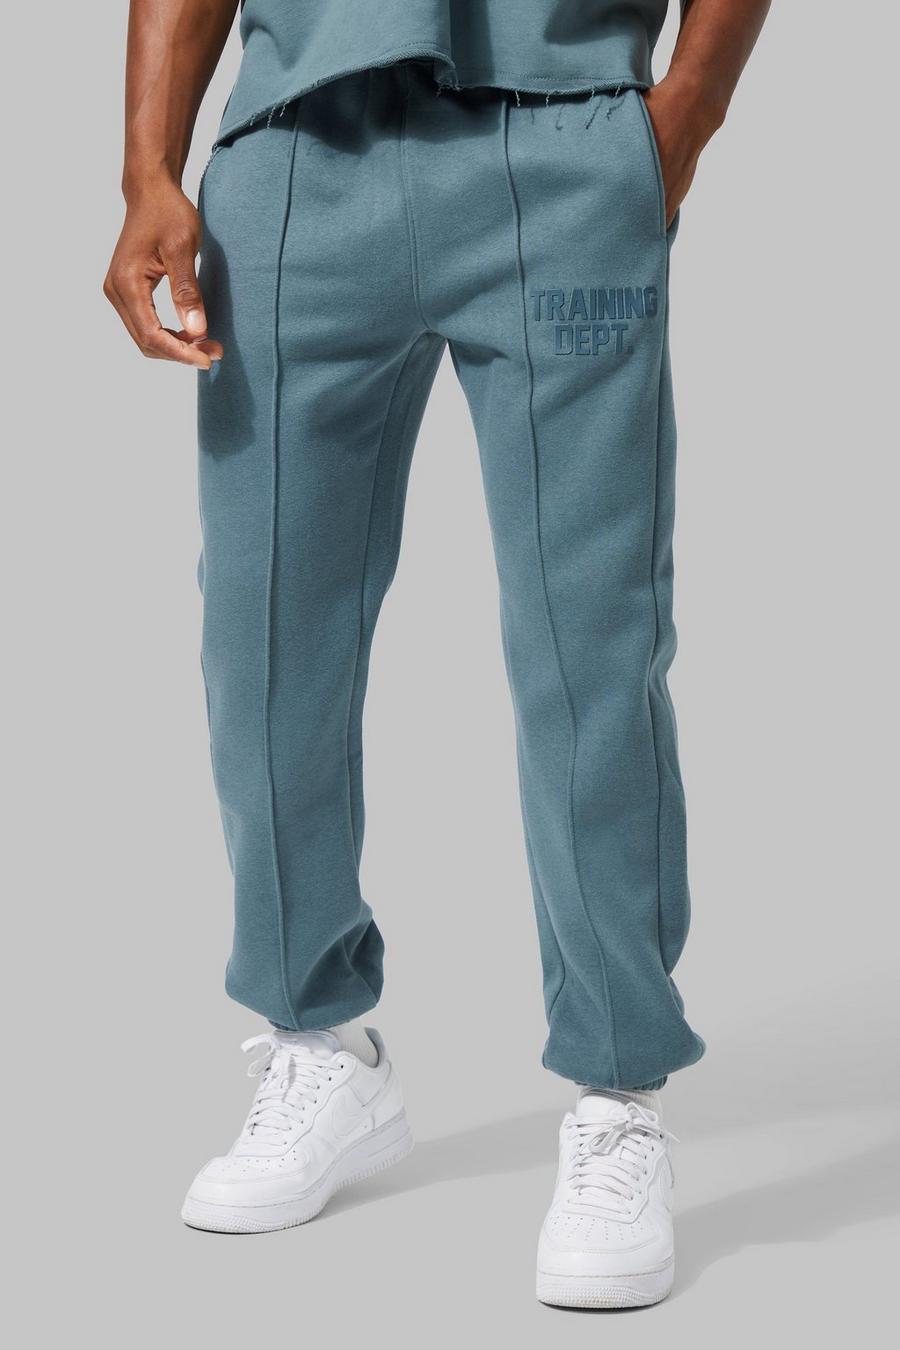 Pantaloni tuta Active Training Dept Slim Fit, Slate blue image number 1